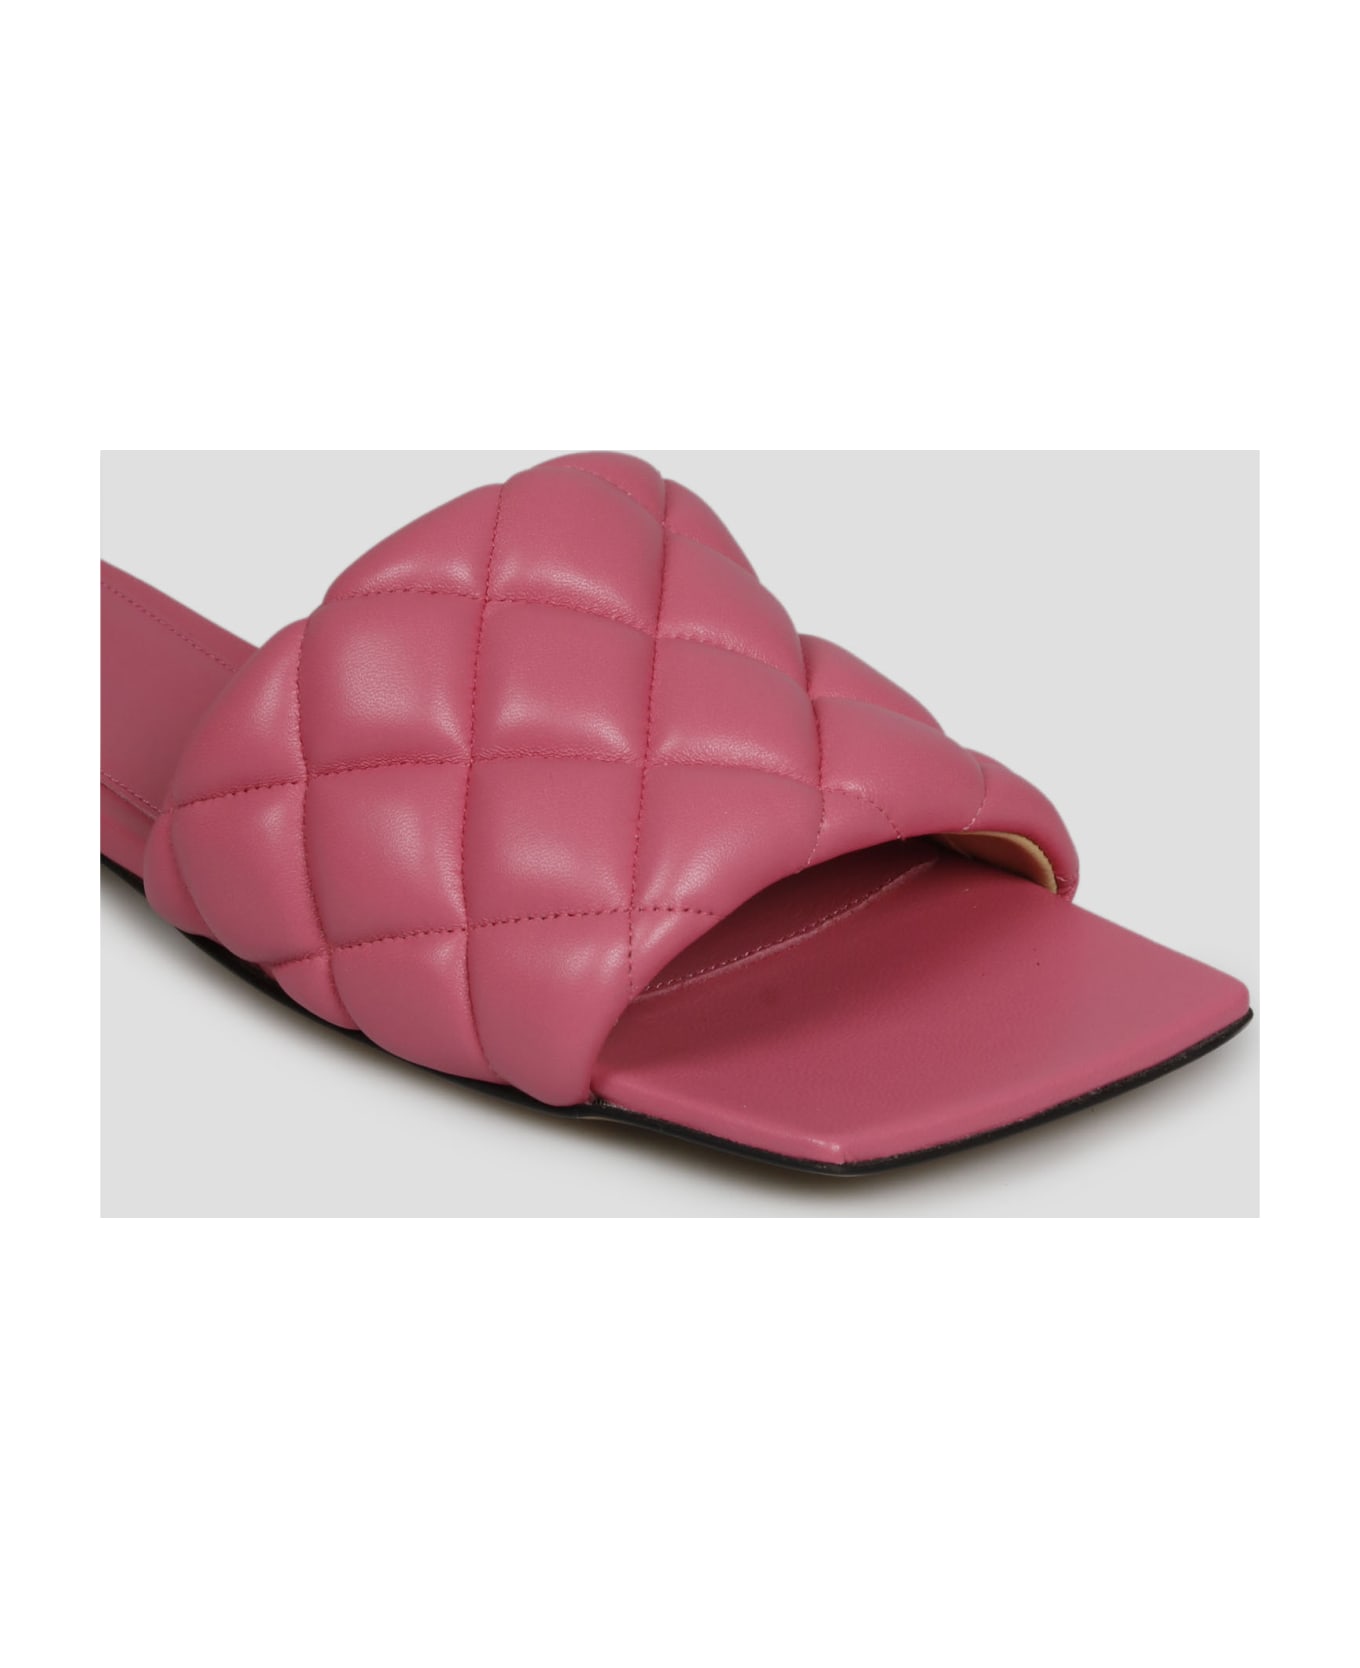 Bottega Veneta Padded Slippers - Pink & Purple サンダル